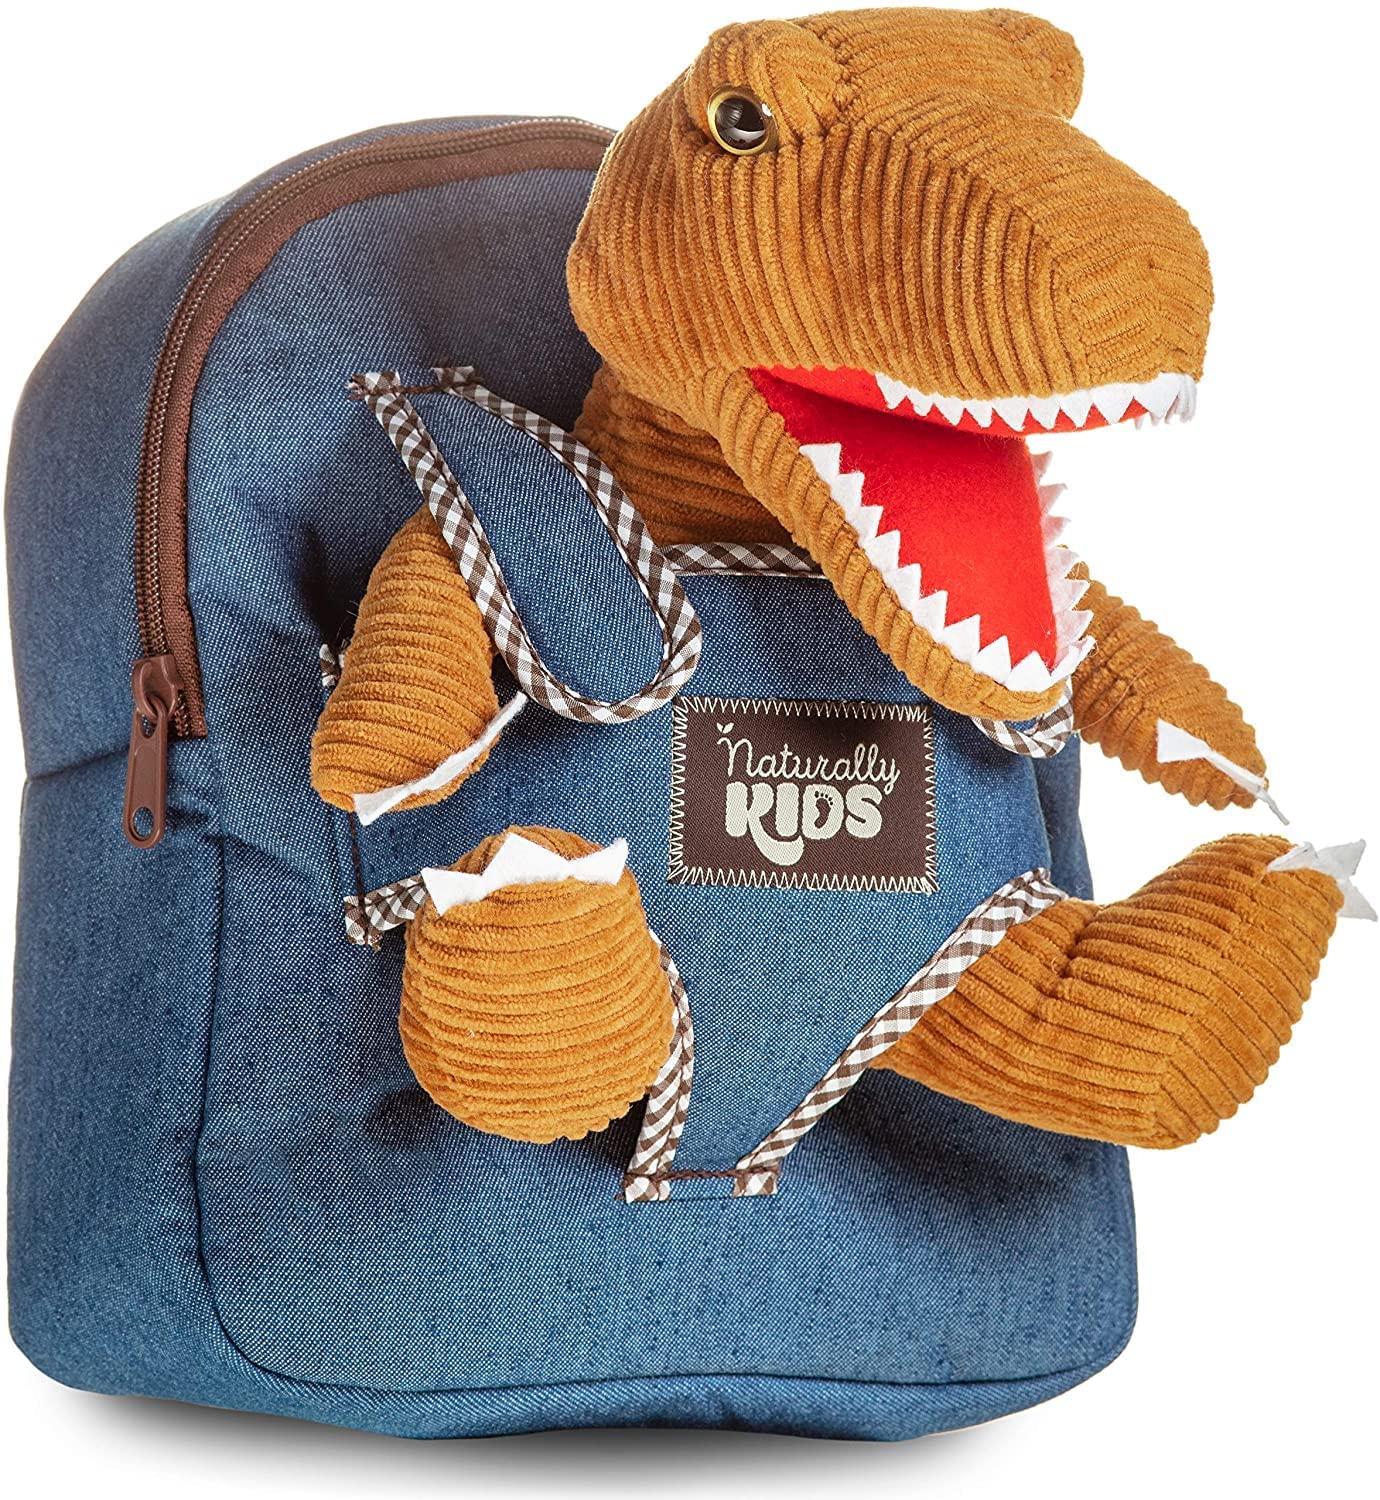 Naturally KIDS Dinosaur Plush Mini Backpack